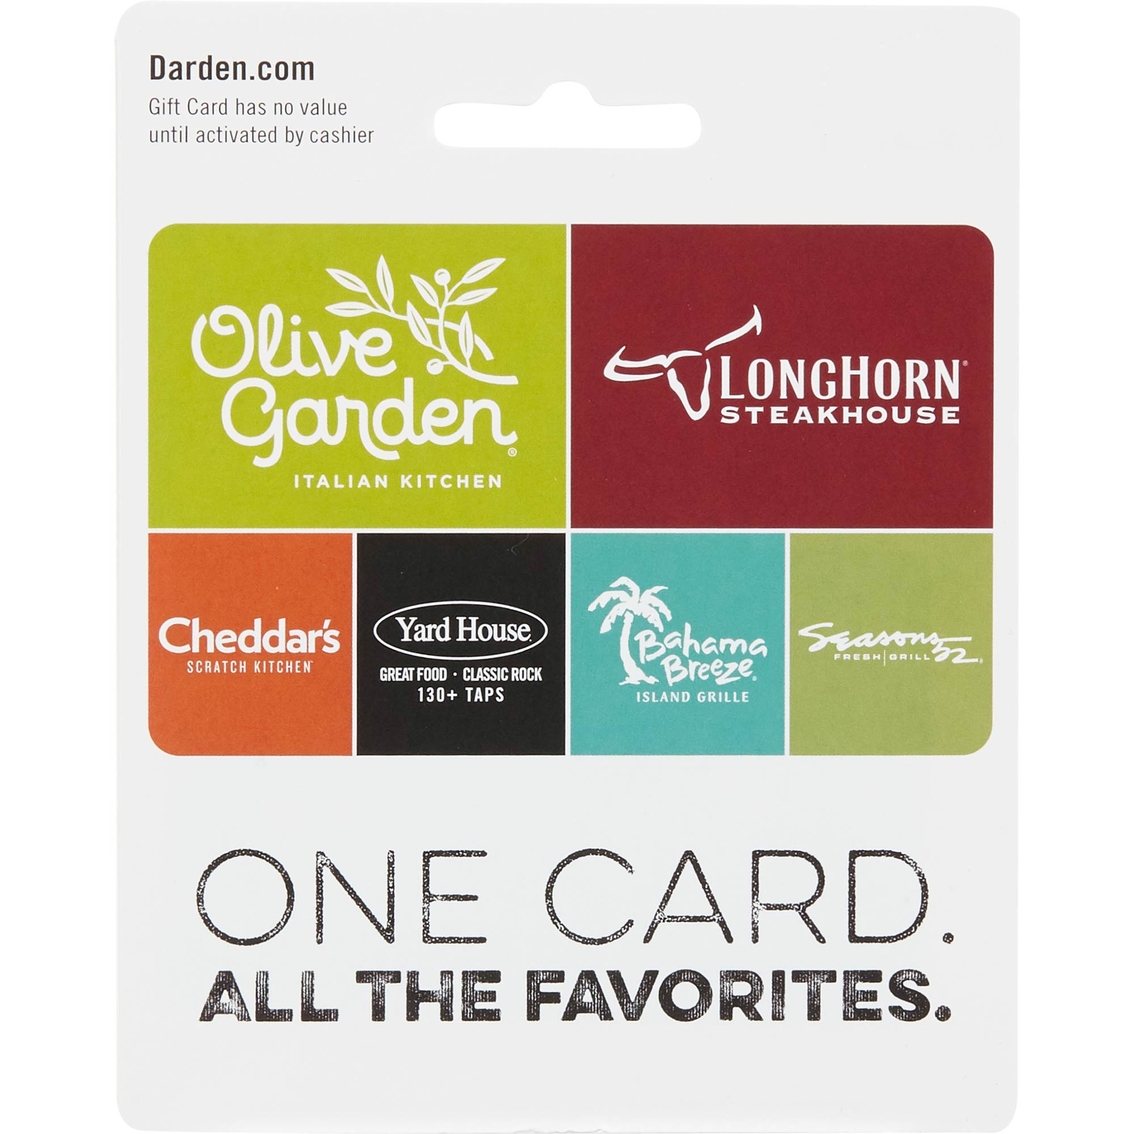 Darden Restaurants Gift Card Entertainment Dining Gifts